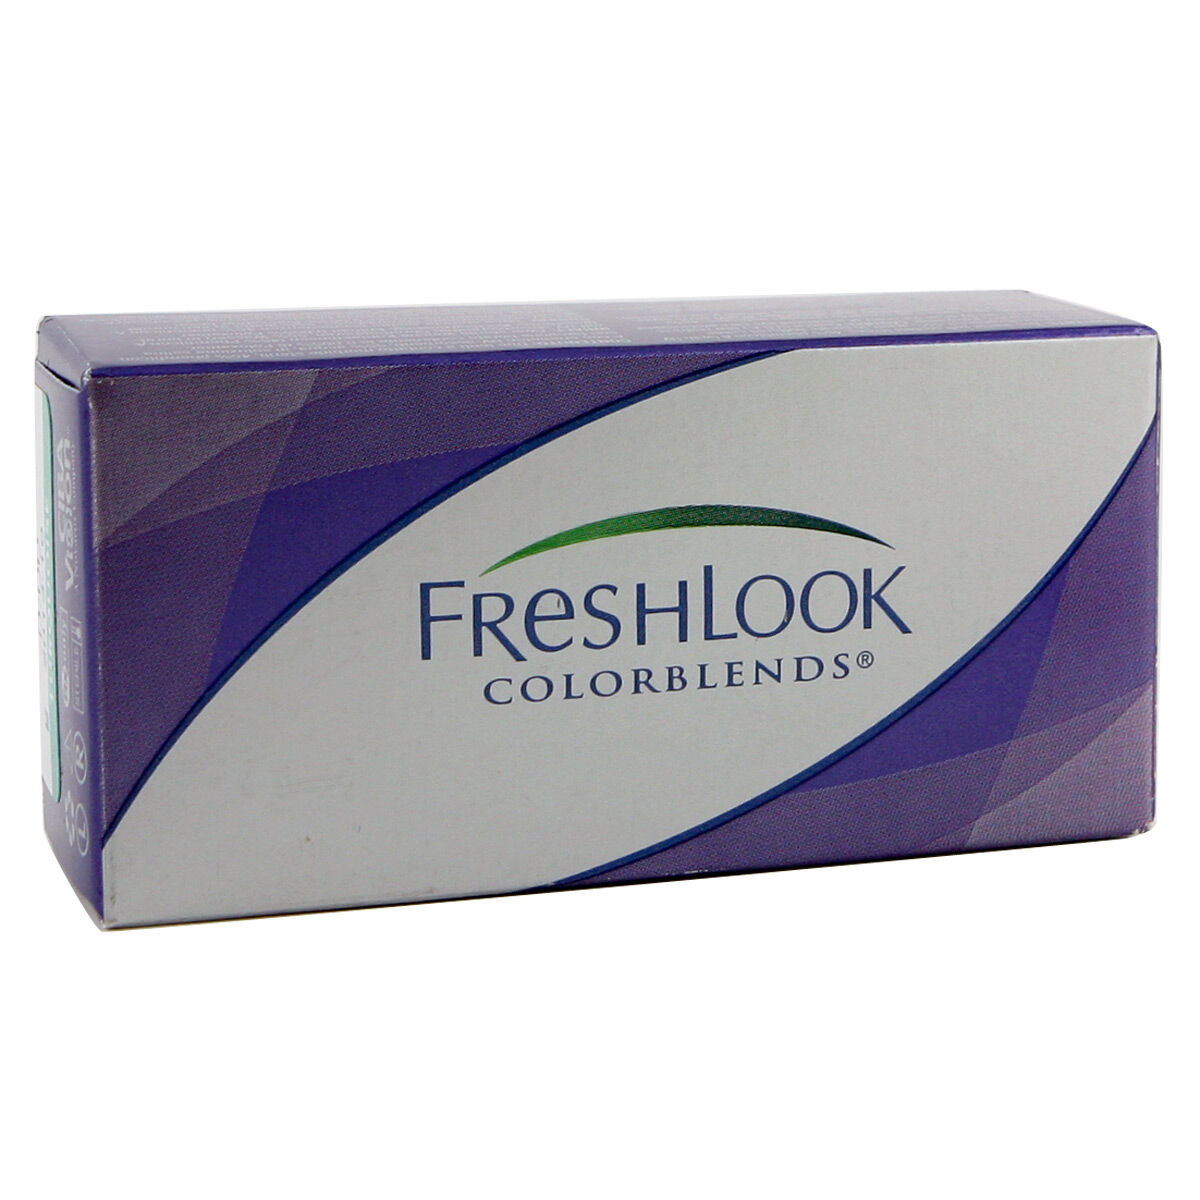 Alcon Freshlook Colorblends (2 Contact Lenses), Gemstone Green, Ciba Vision/Alcon, Monthly Coloured Lenses, Phemfilcon A